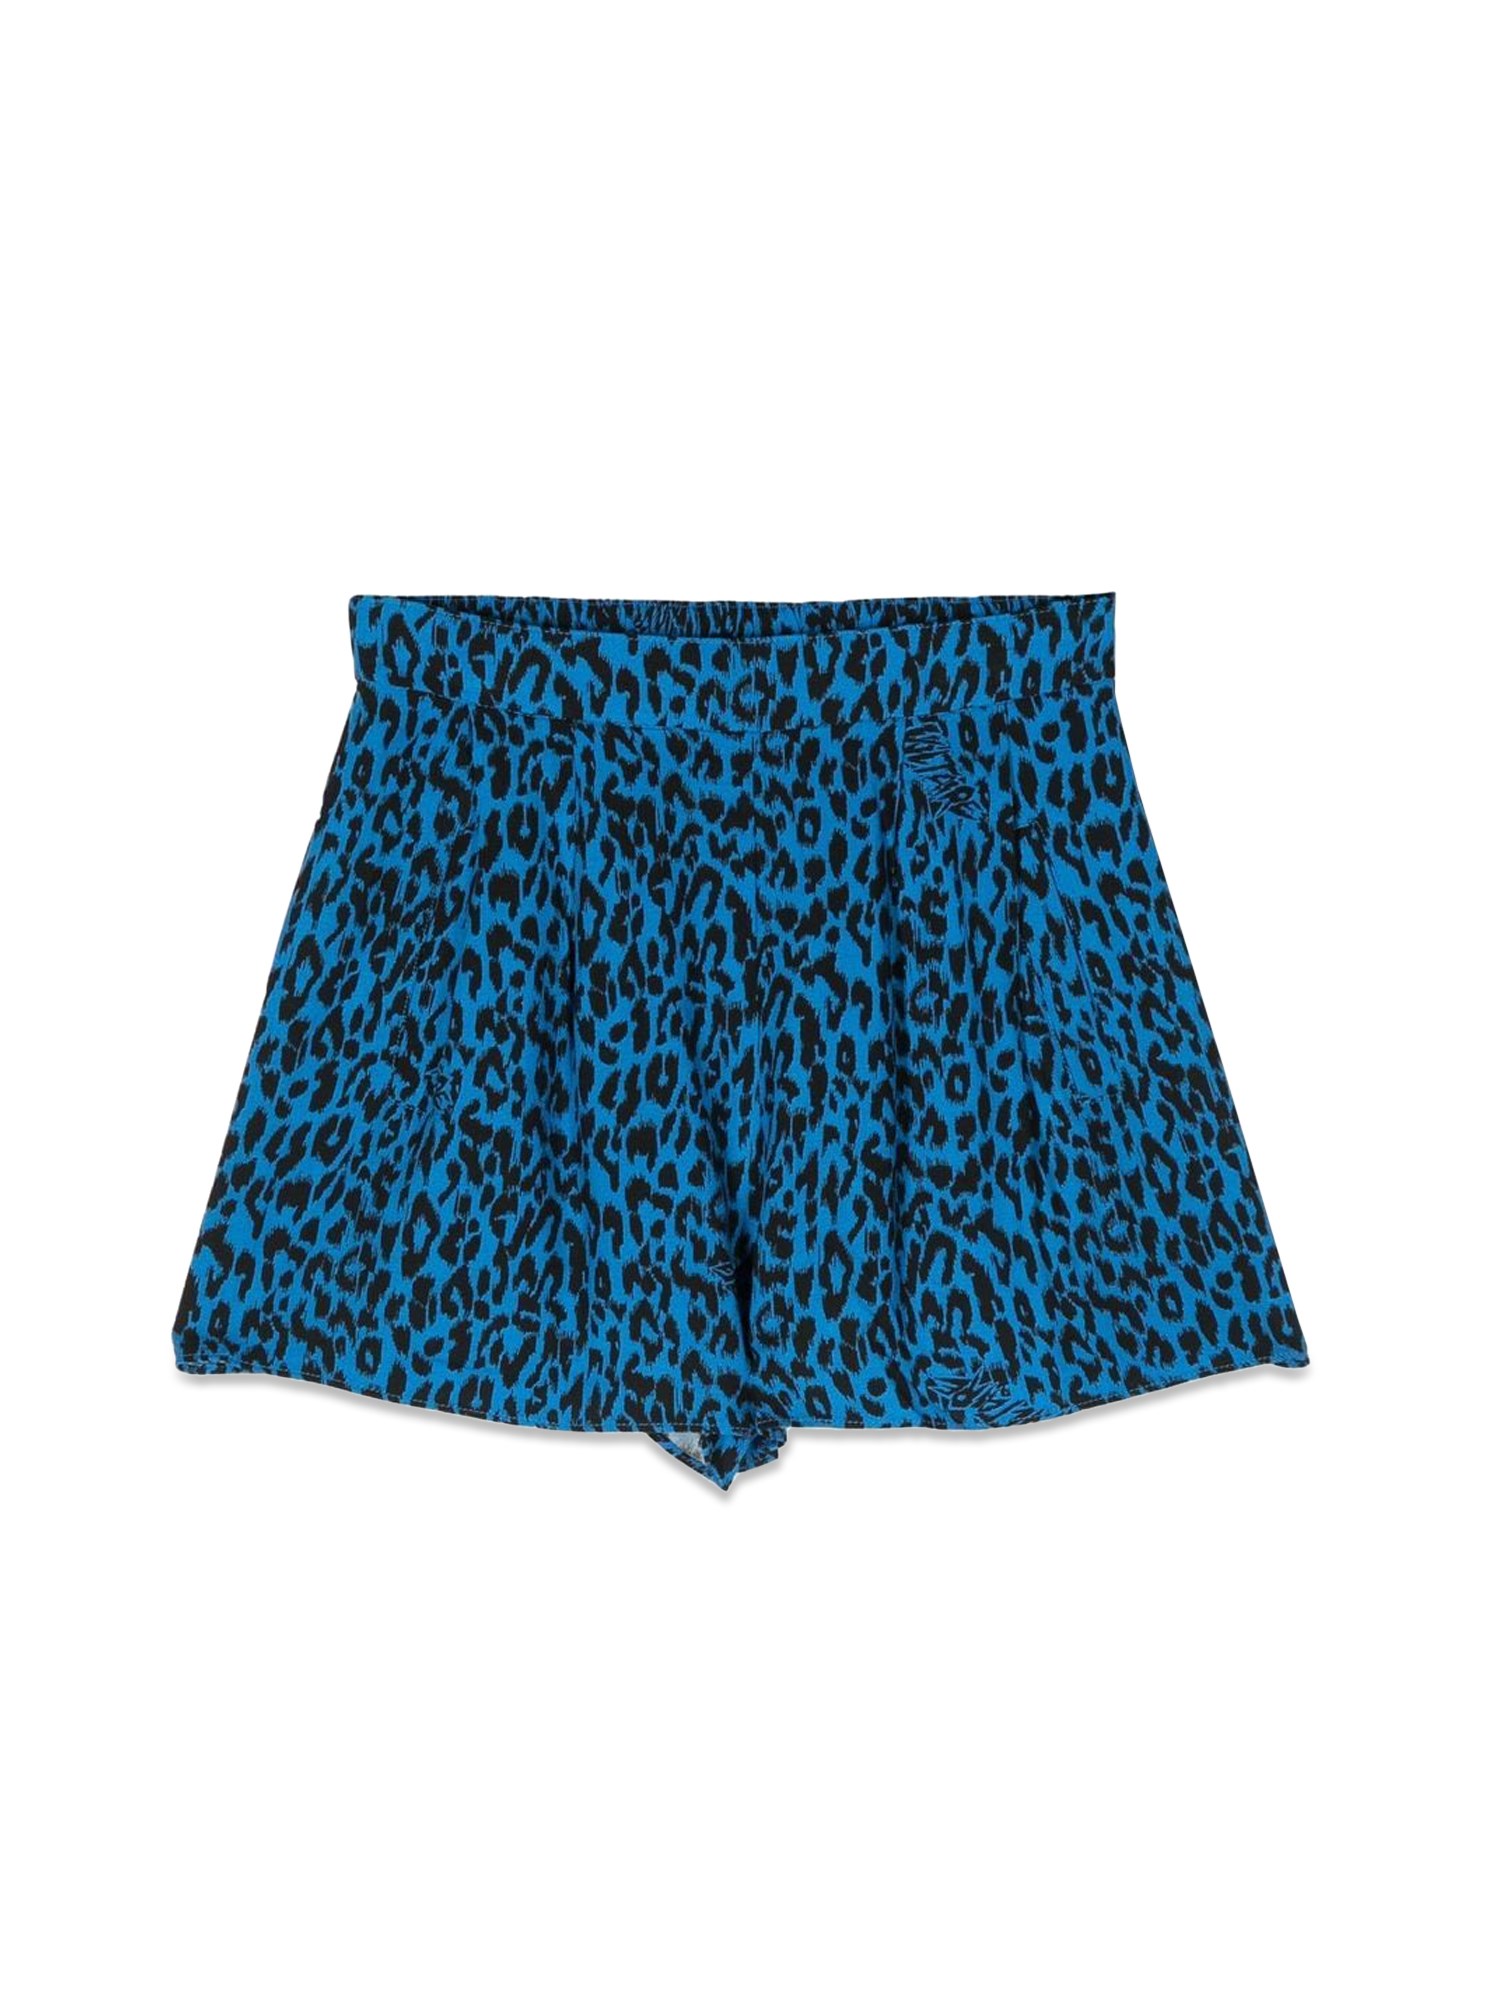 zadig & voltaire leopard shorts